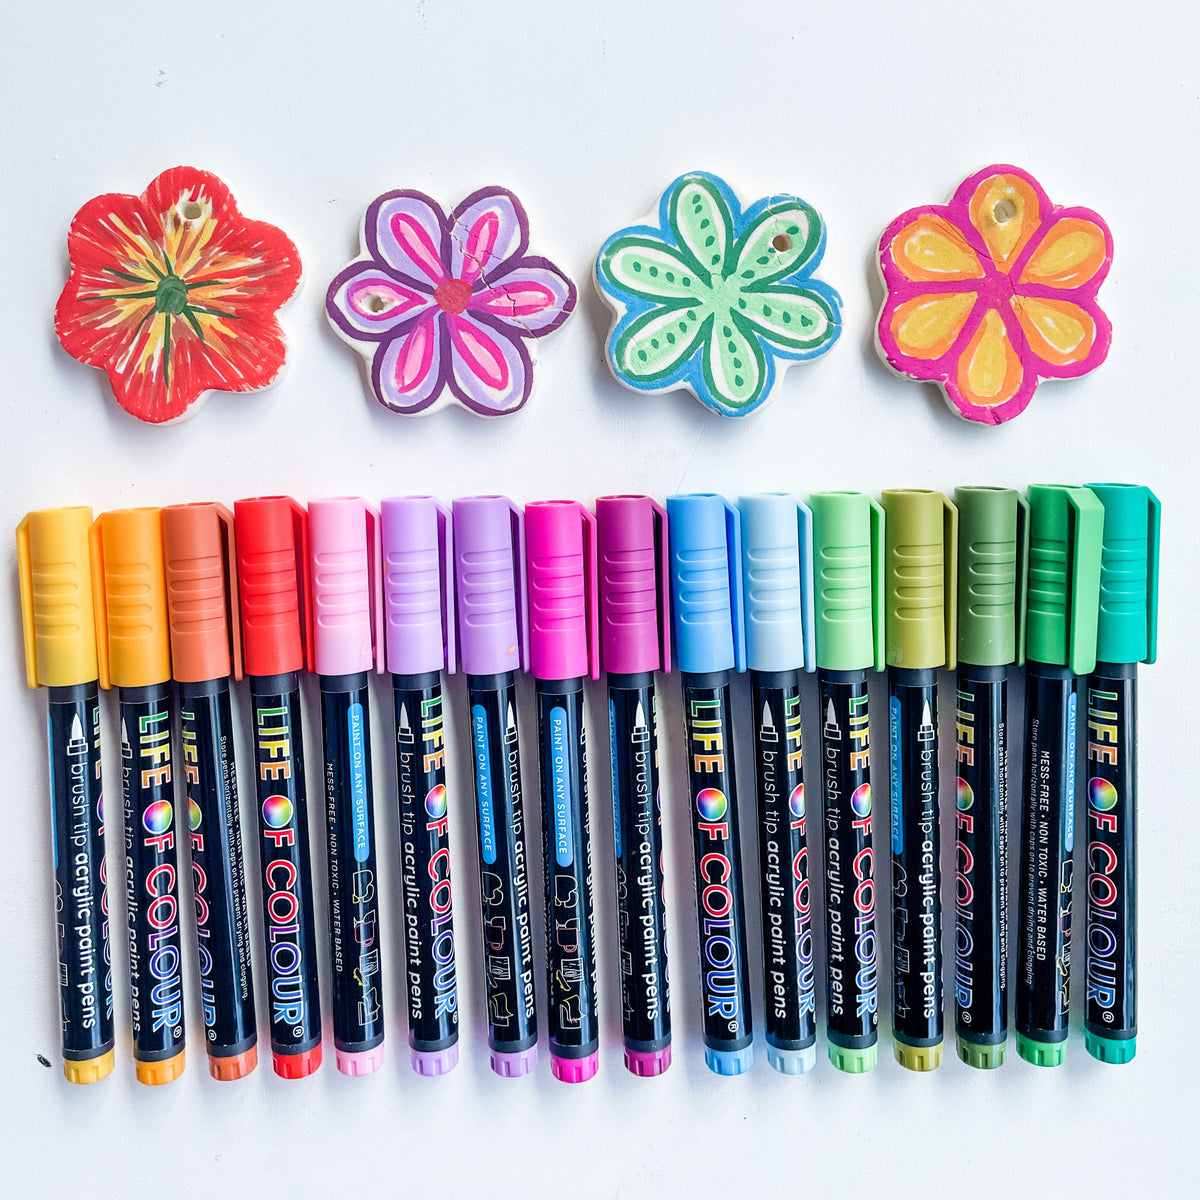 Floral Colours Brush Tip Acrylic Paint Pens - Set of 16